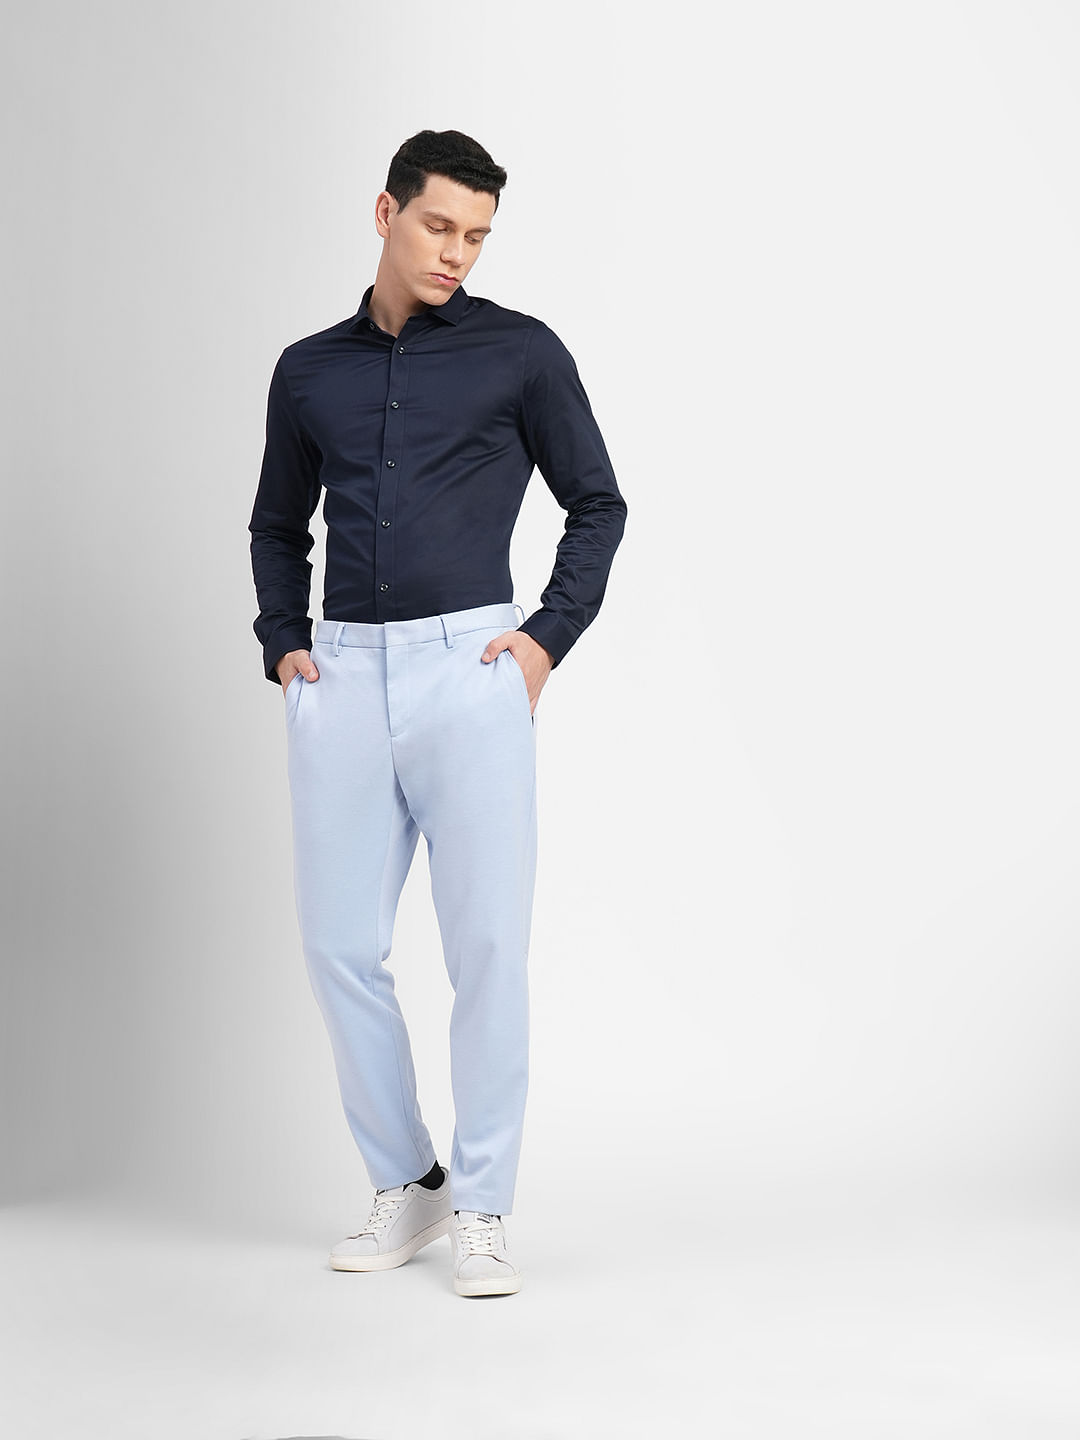 blue pant white shirt with blazer